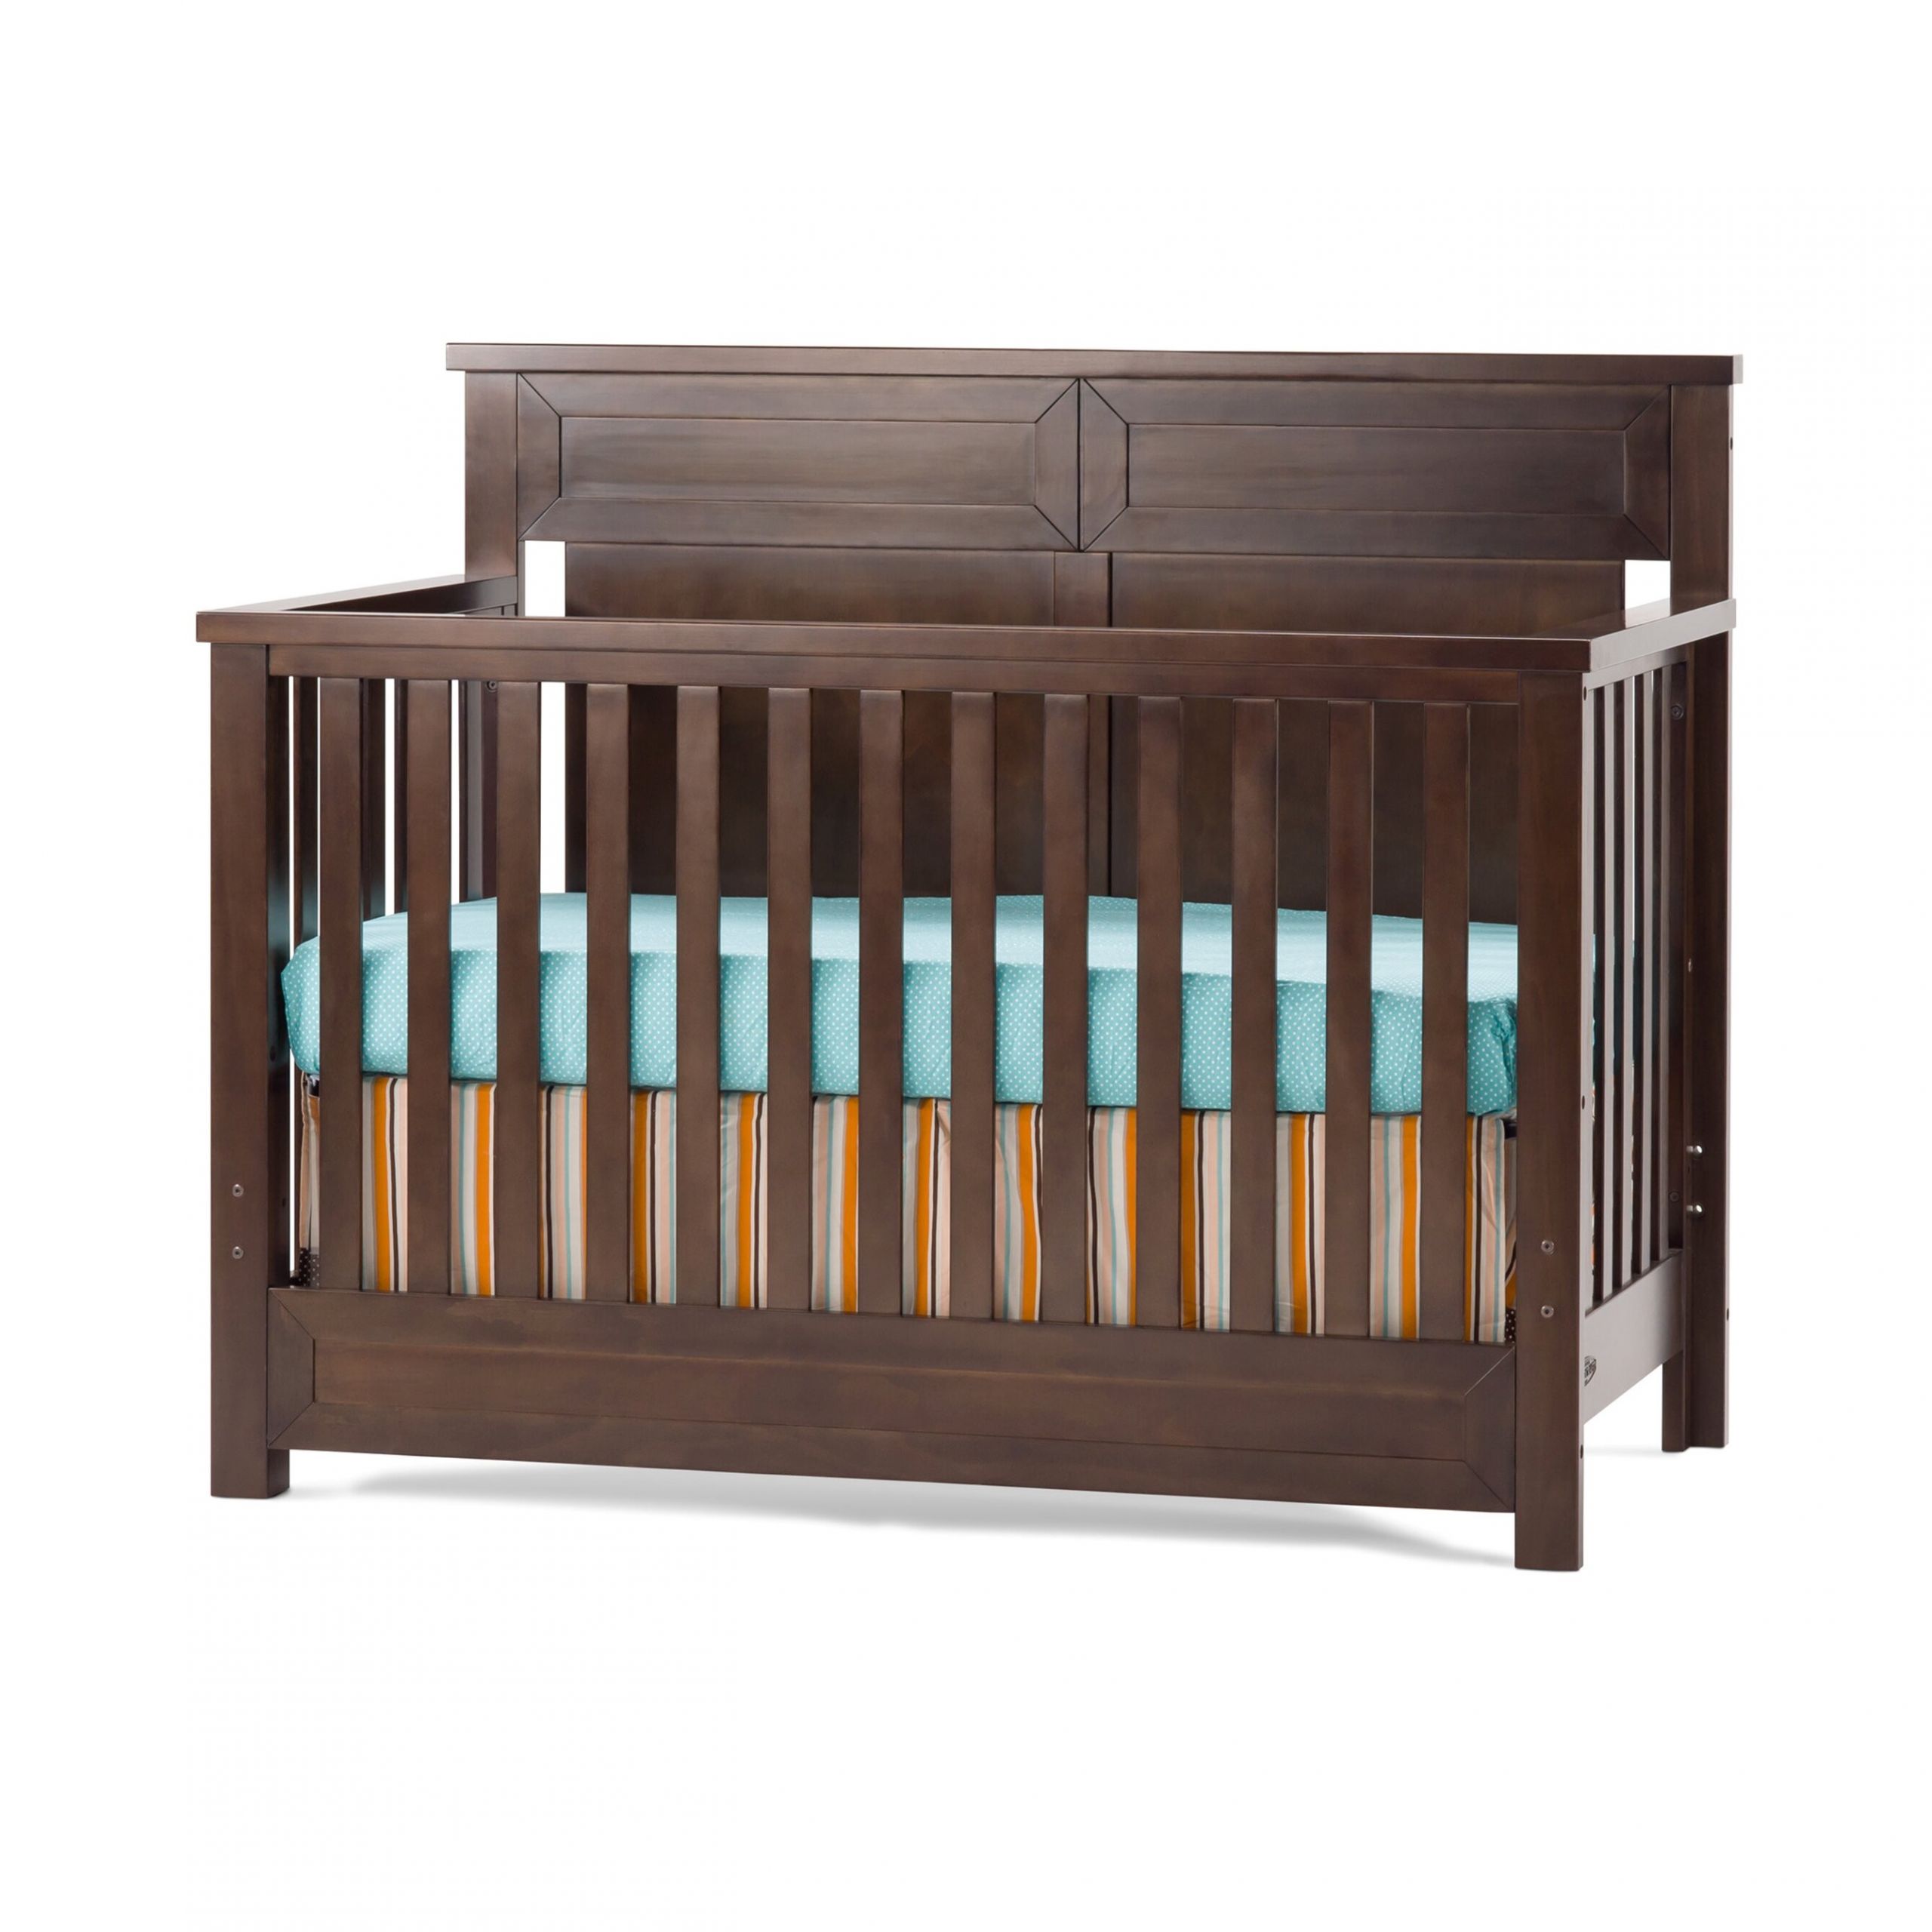 Child Craft Convertible Crib
 Child Craft Abbott 4 in 1 Lifetime Convertible Crib